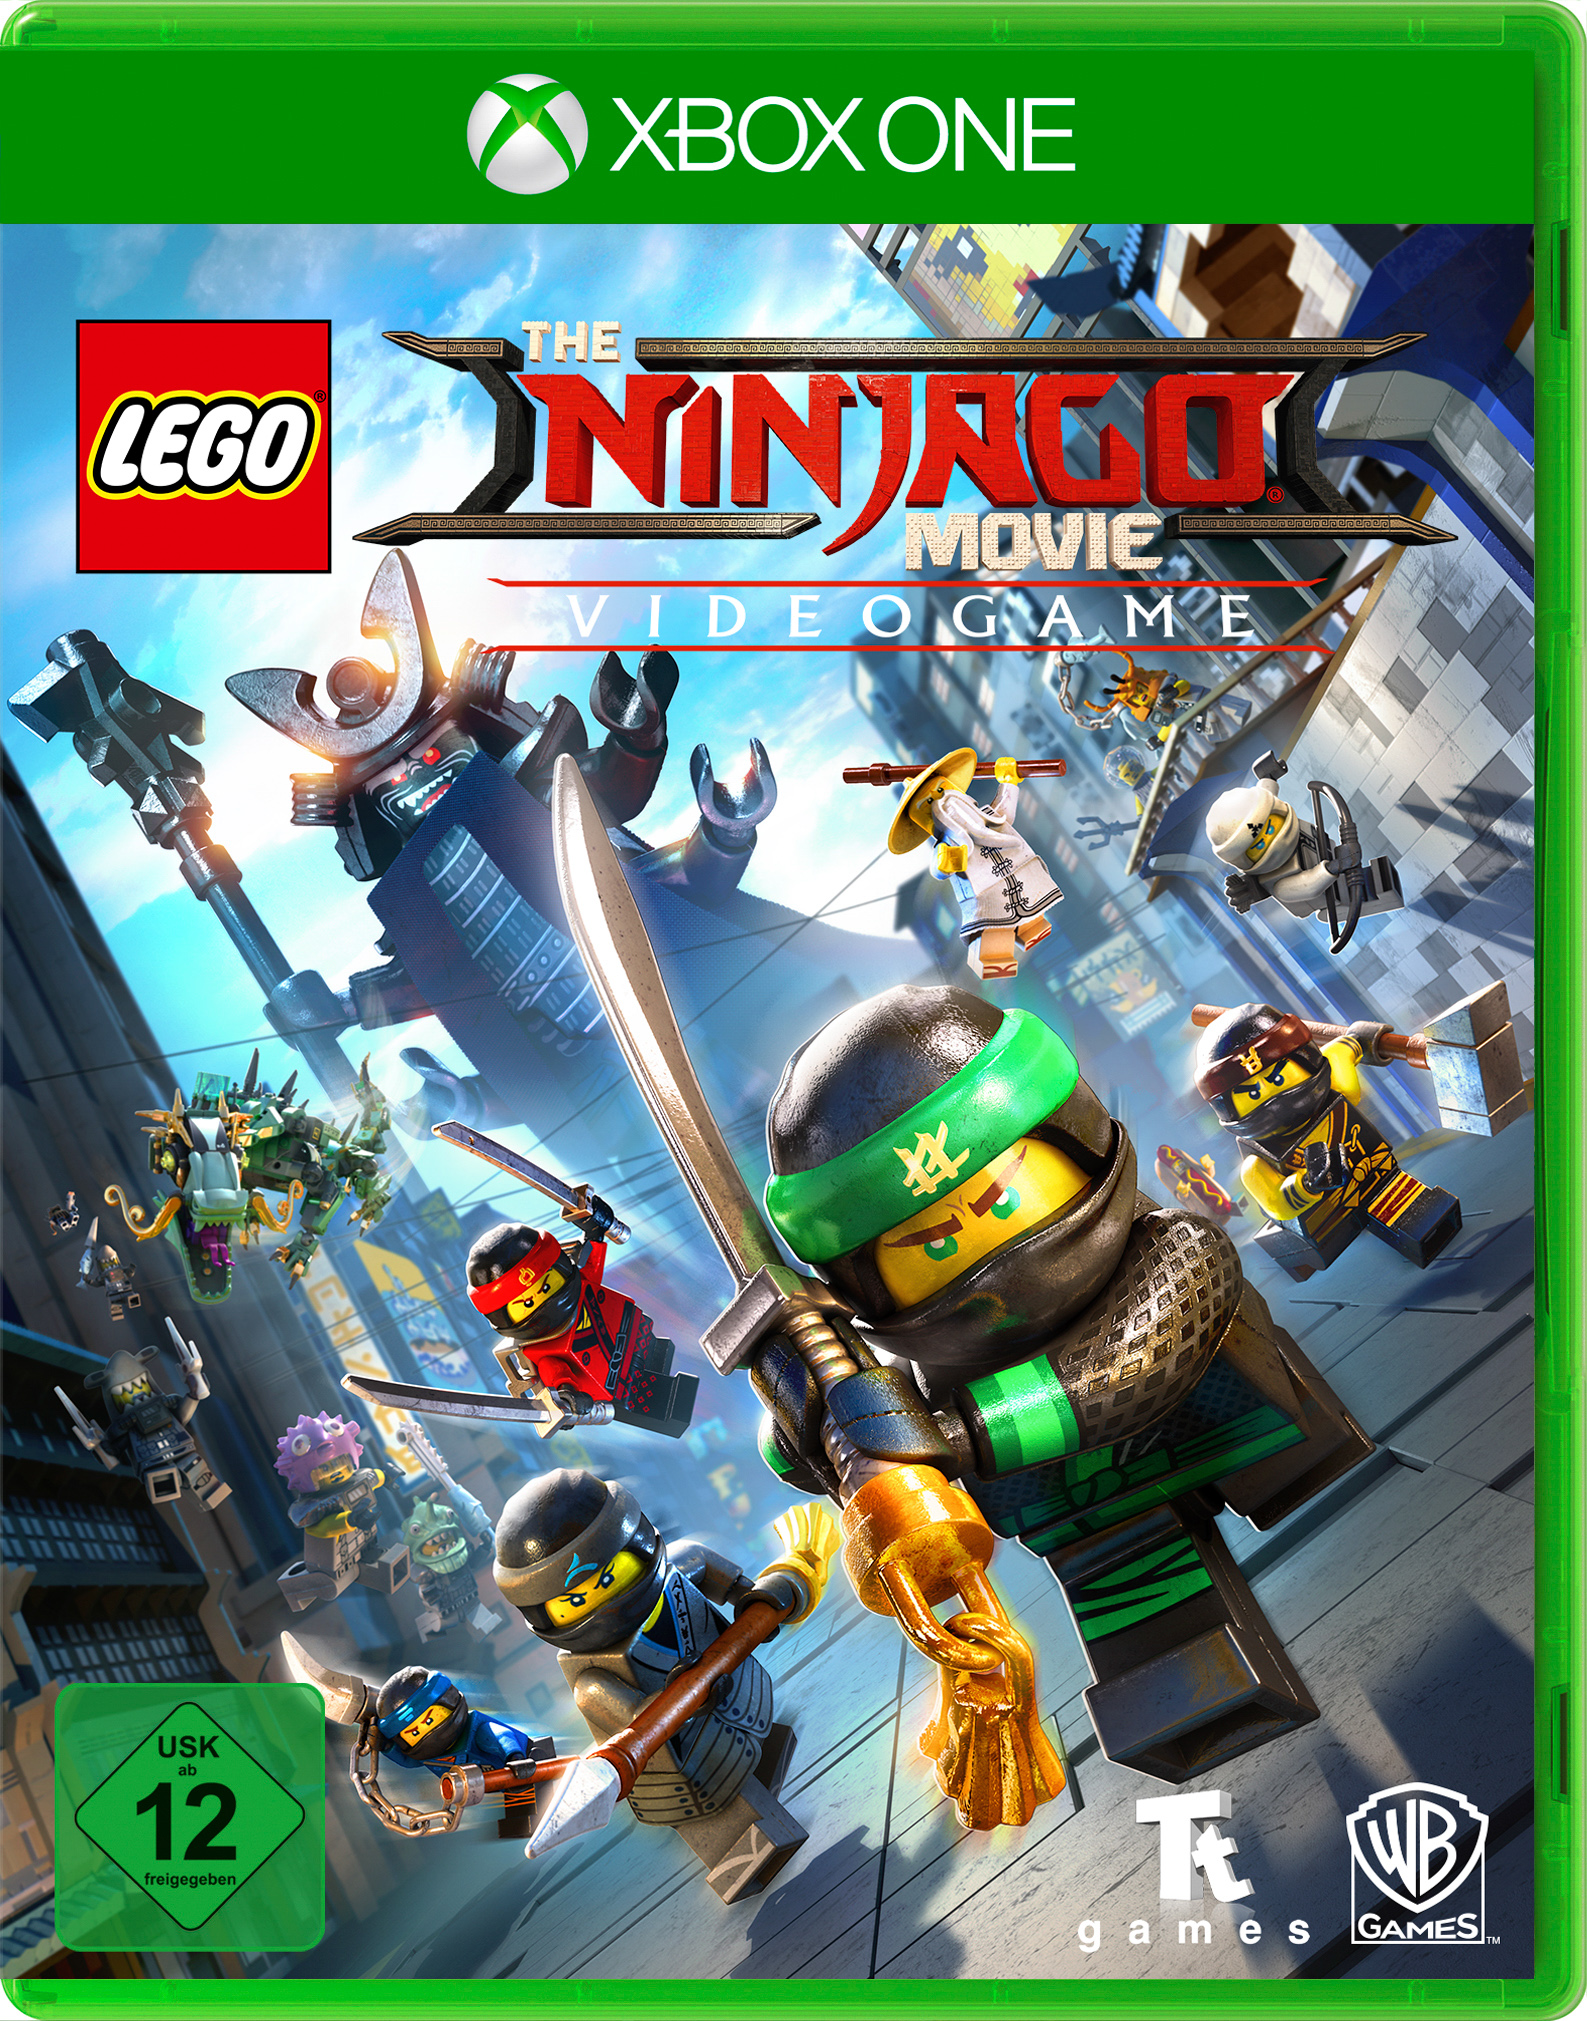 The LEGO Ninjago Movie Videogame